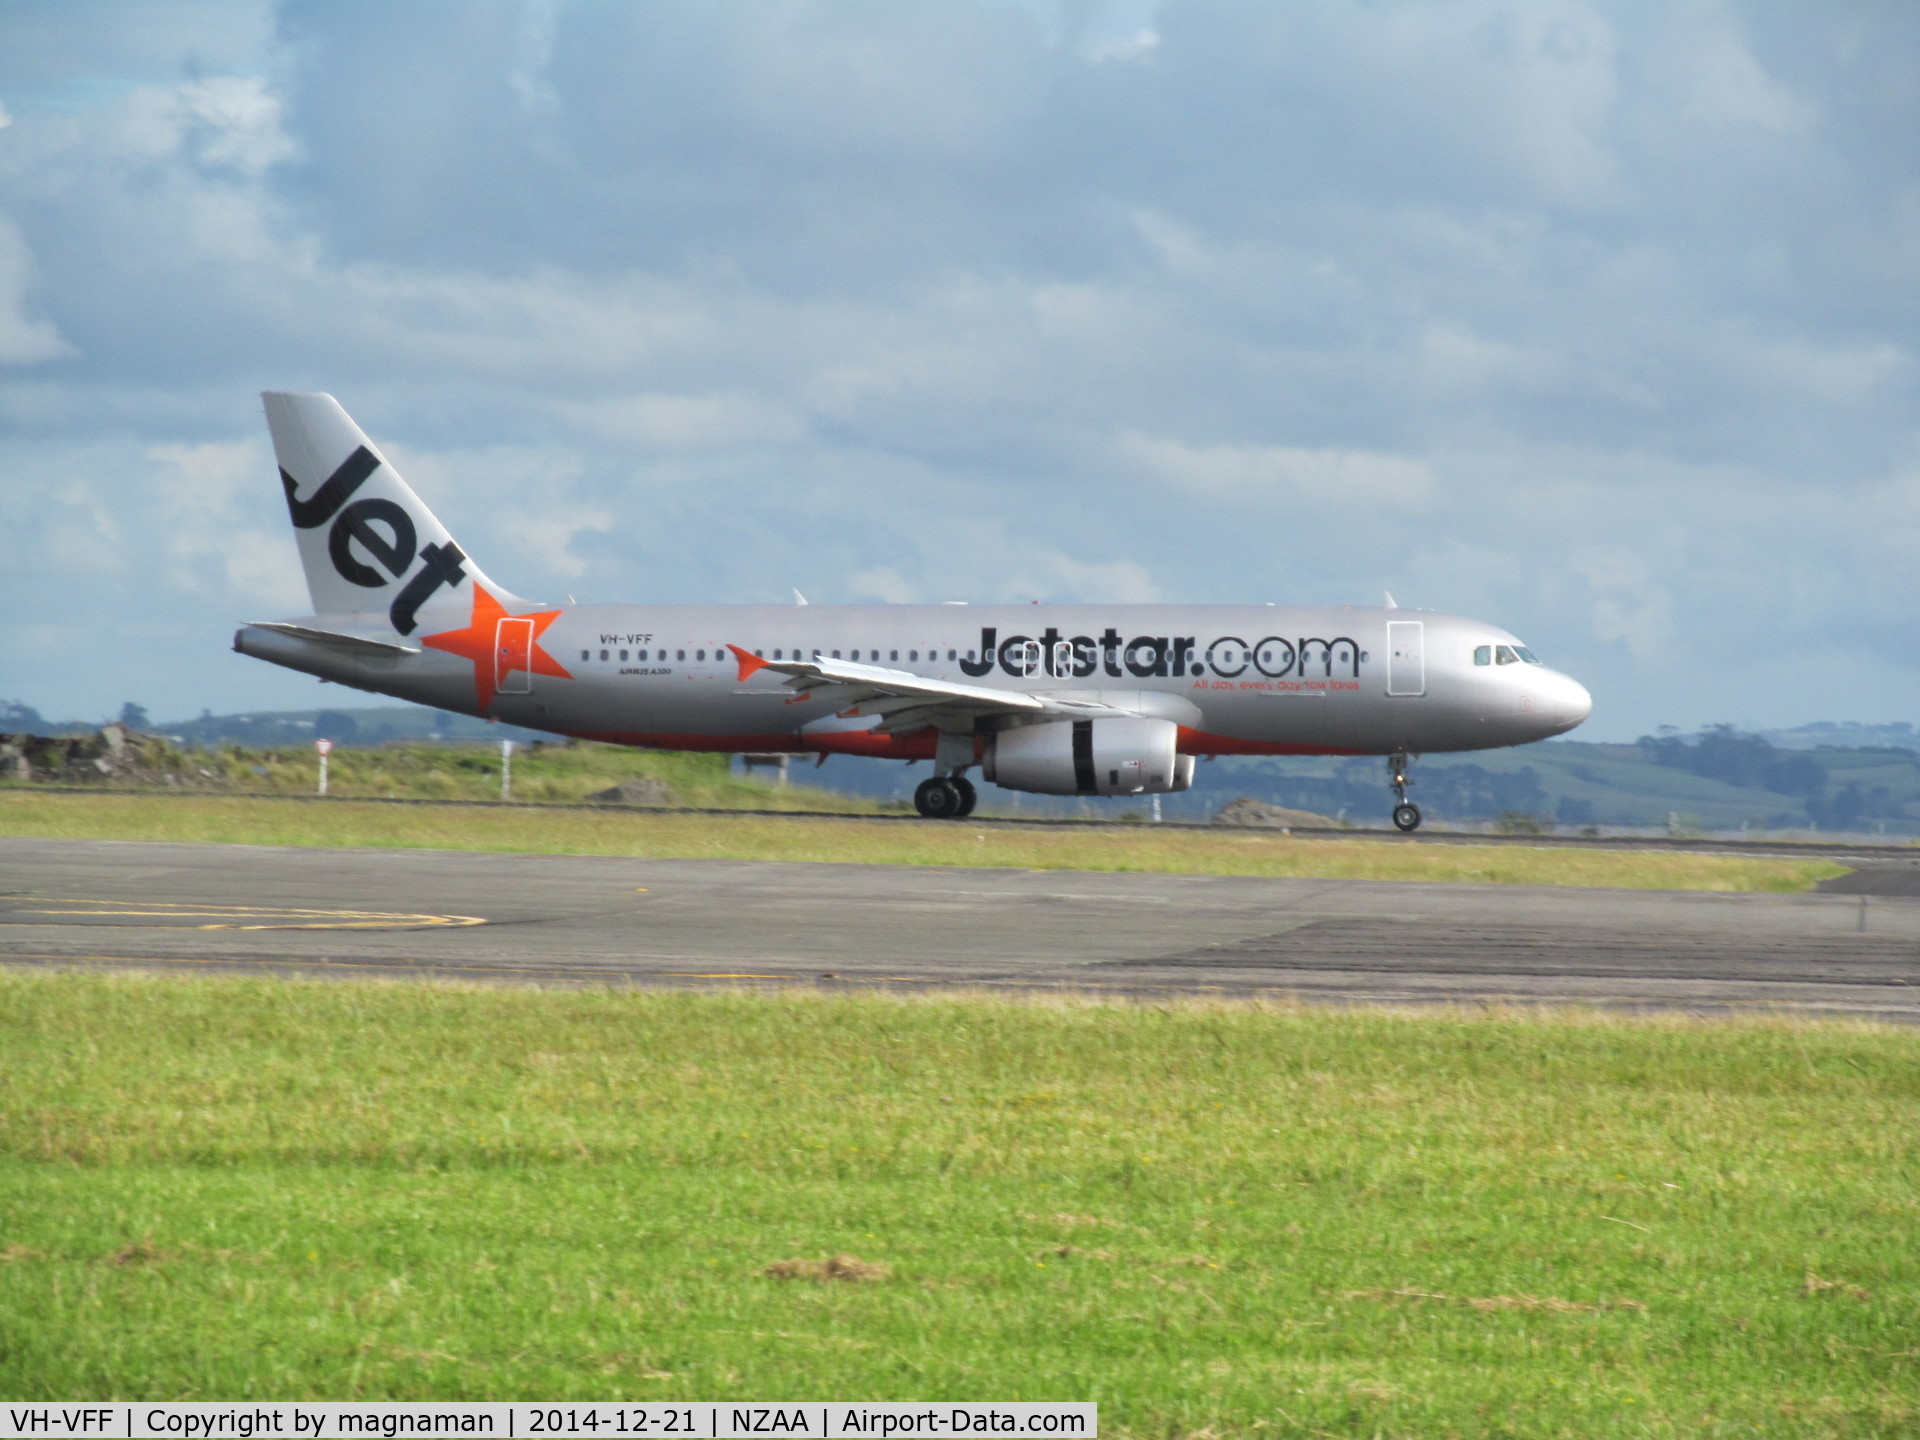 VH-VFF, 2012 Airbus A320-232 C/N 5039, landing at NZAA